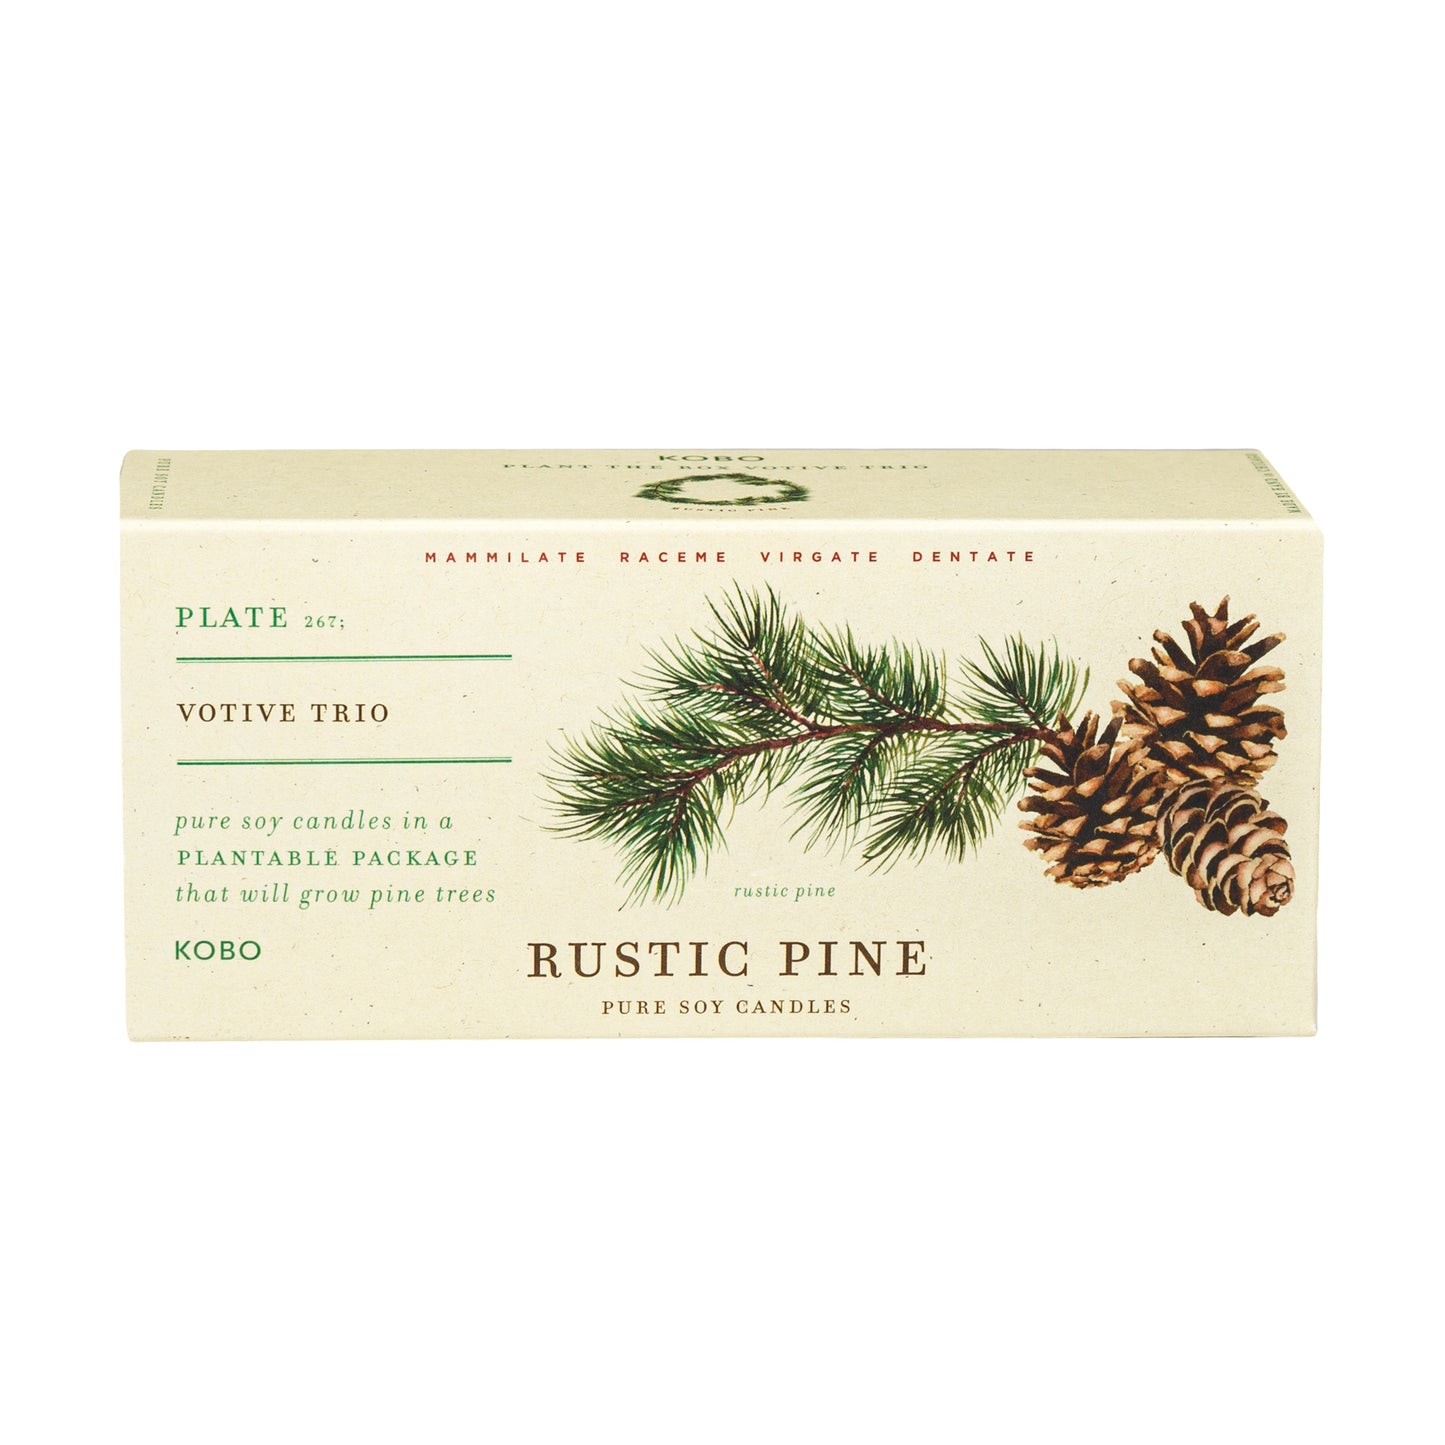 Rustic Pine Plant the Box Votive Trio 3 x 2.3oz Candles